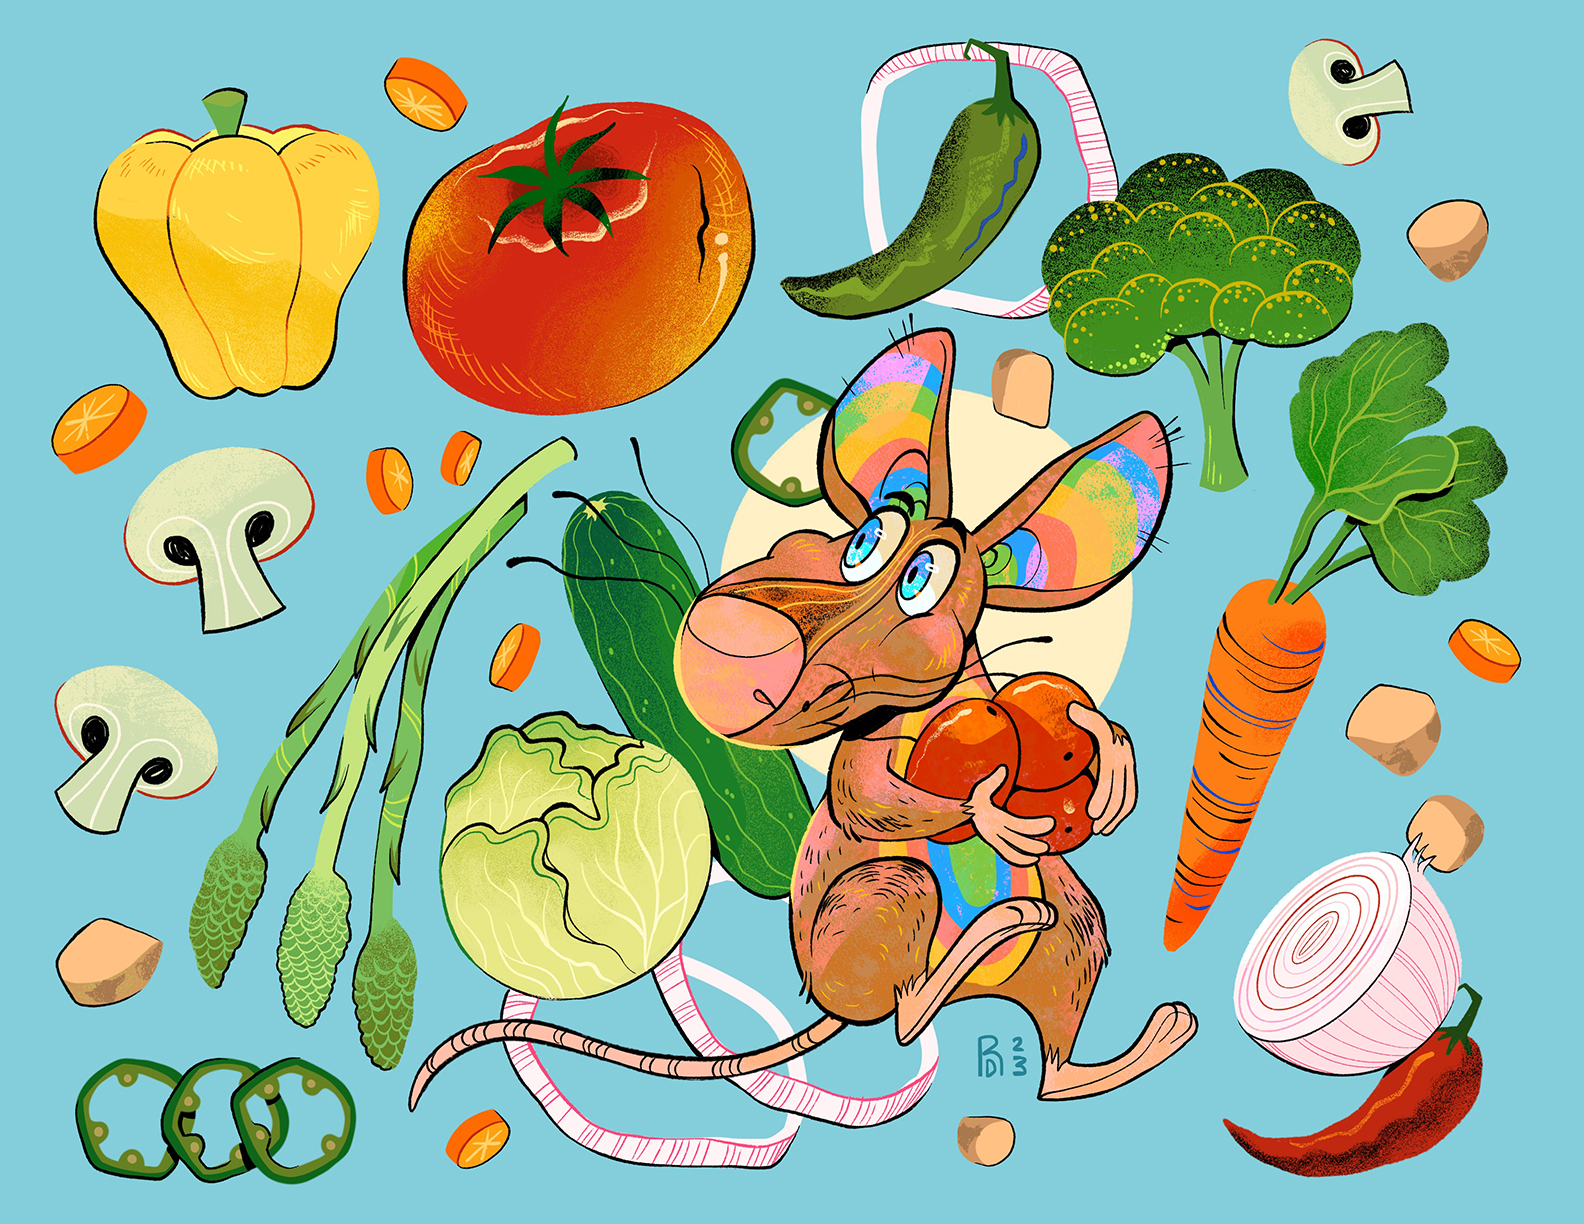 “Salad” – brown mouse with vegetables illustration